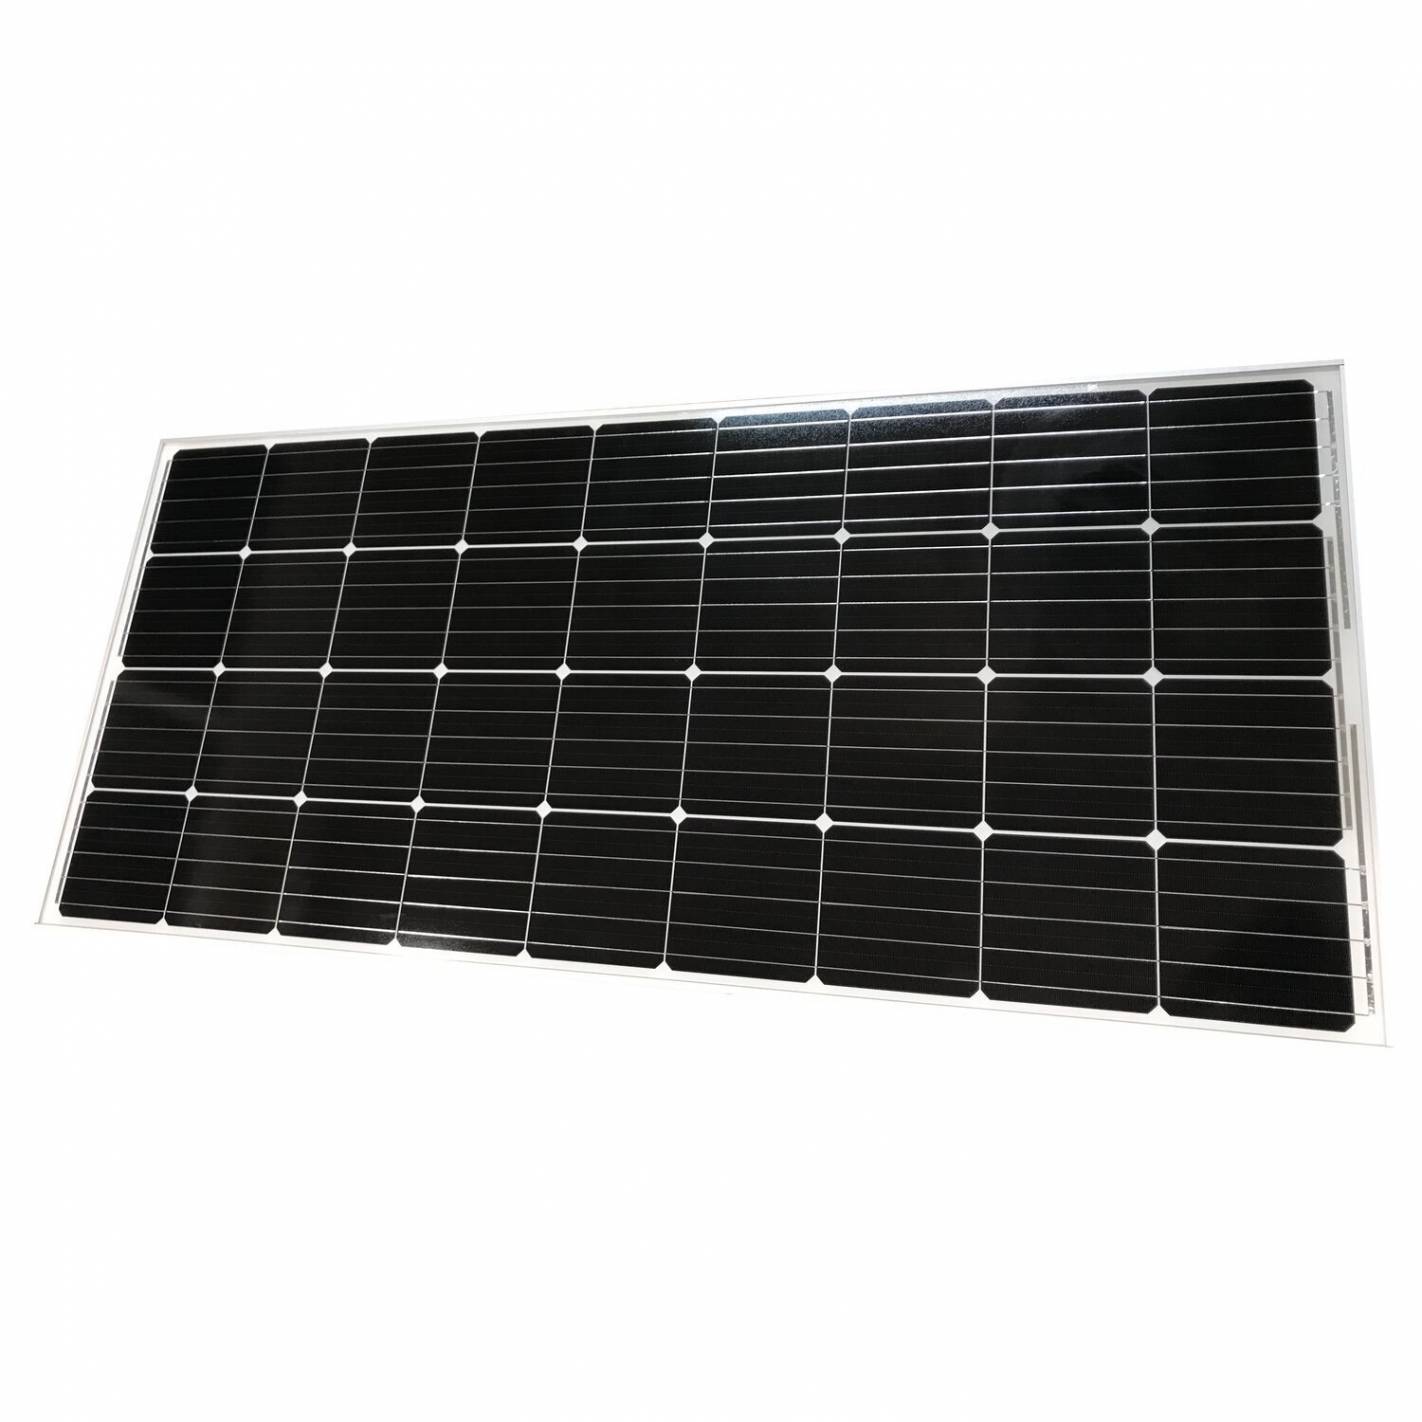 Panel solar 200W-24V Monocristalino Victron, alta sensibilidad